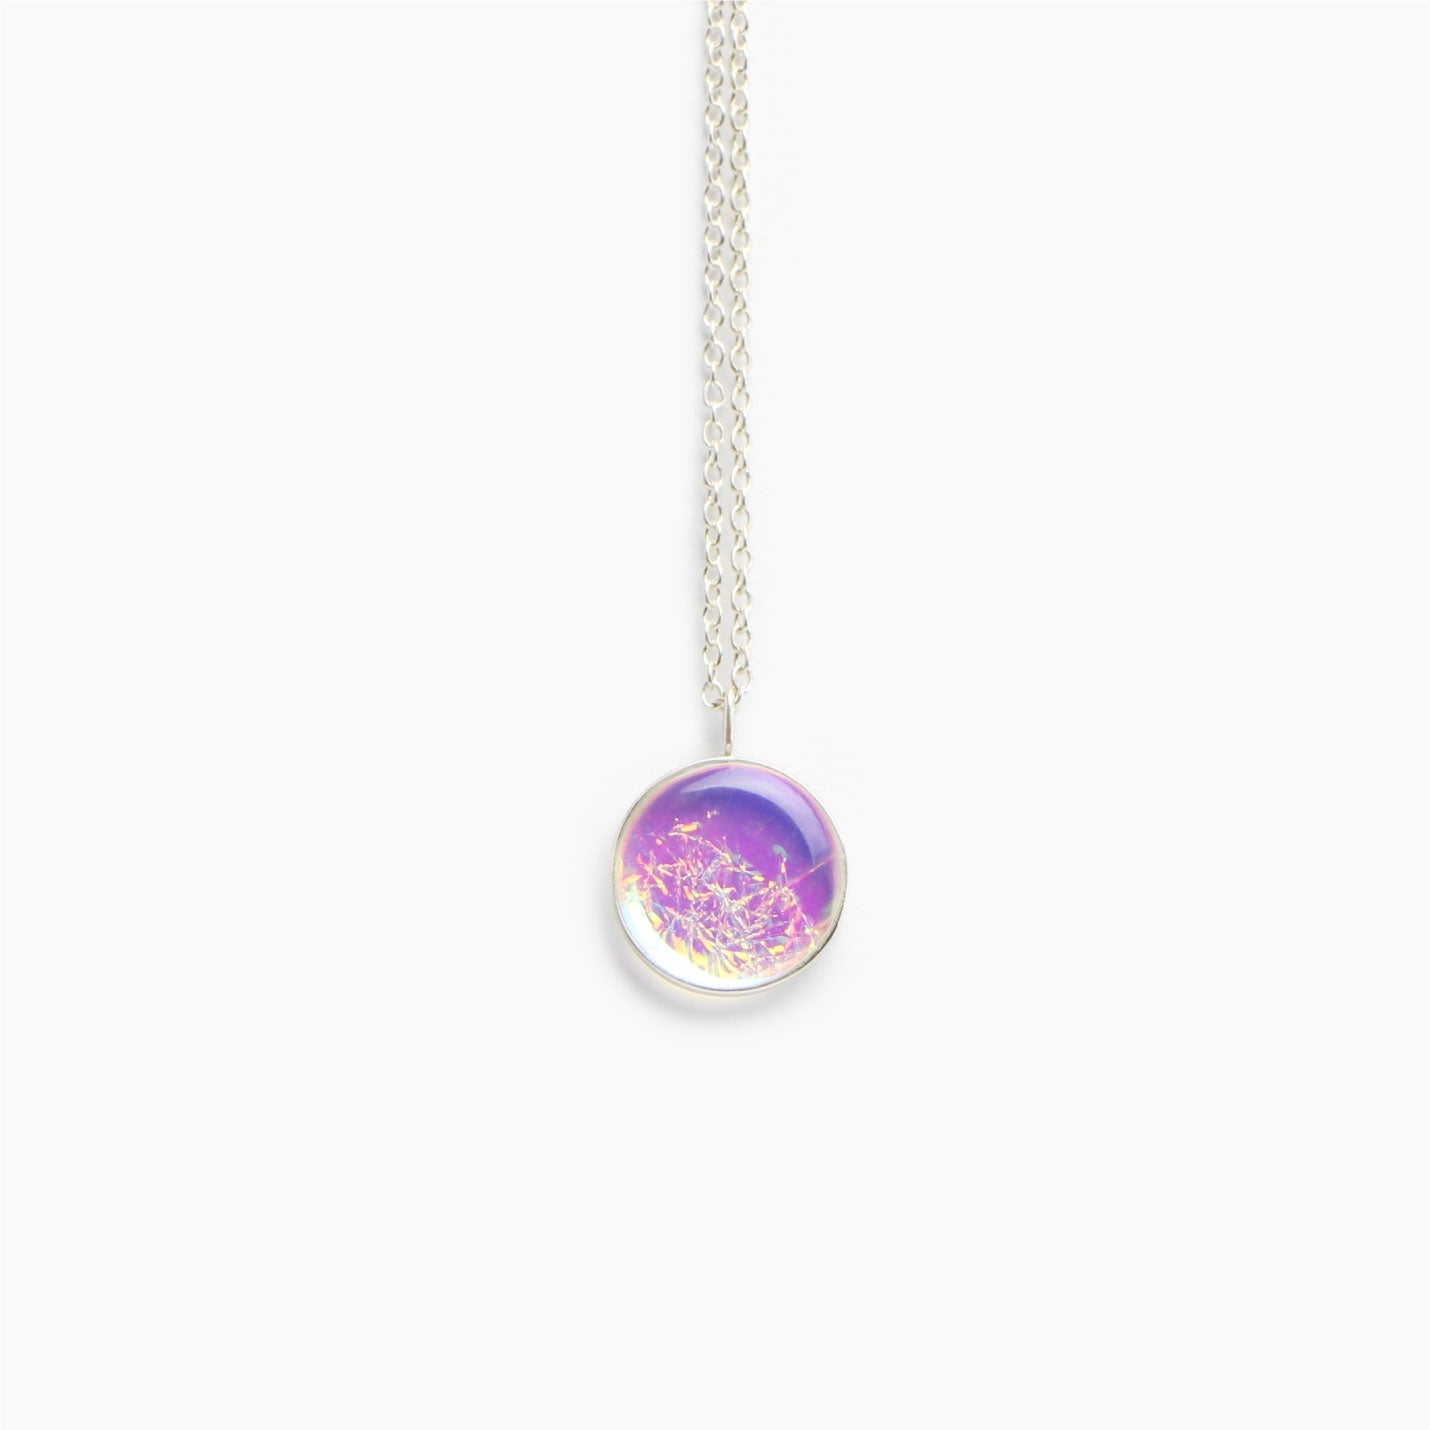 Luna Full Moon Necklace - Lilac - Aisling Chou Studio